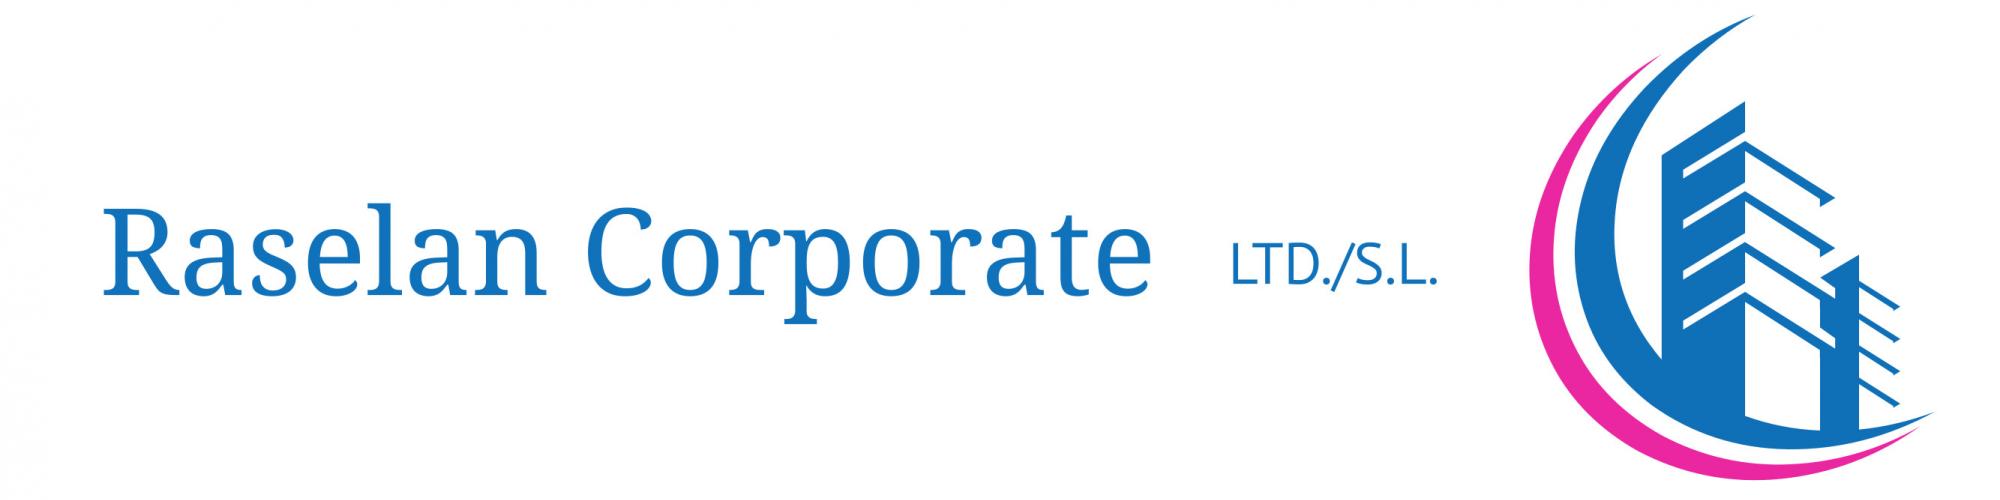 Raselan Corporate Group